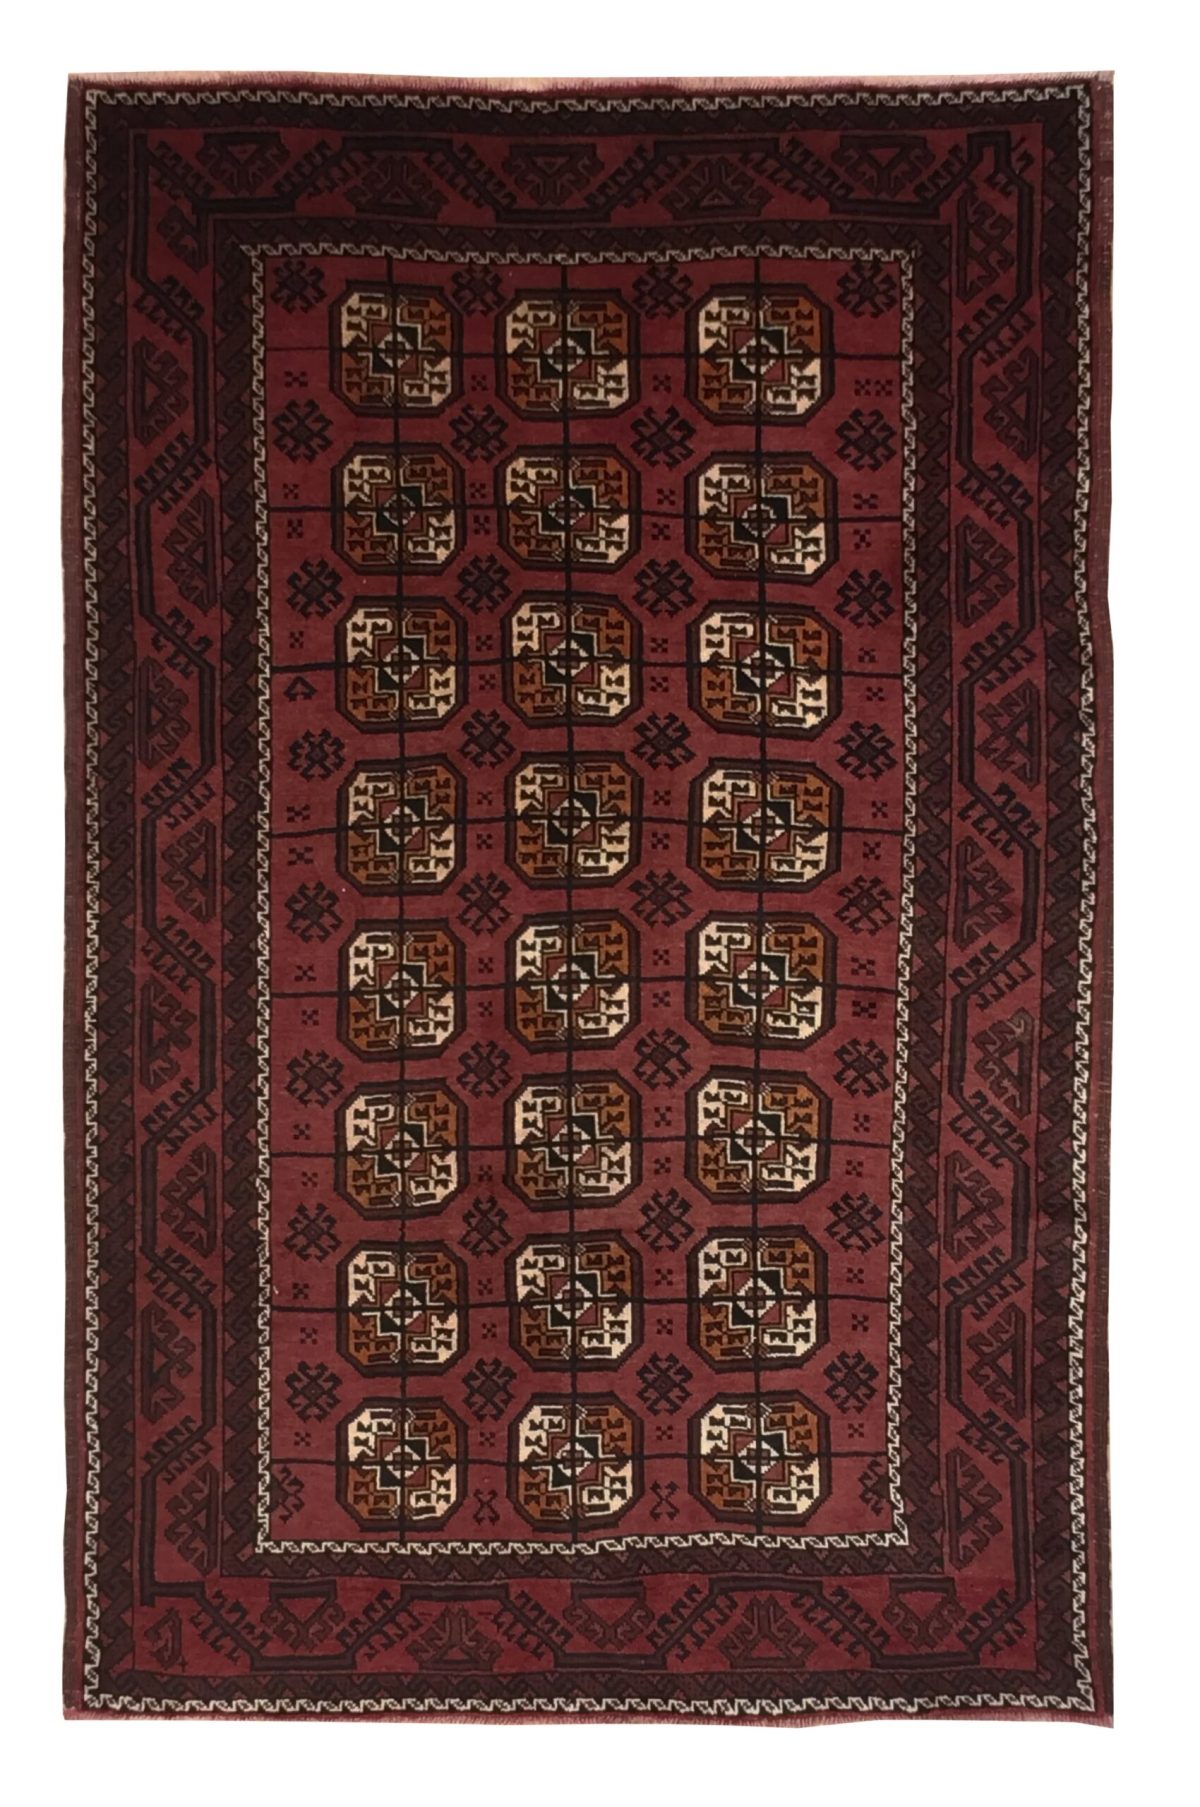 Antique Persian Balouchi 4' 10" x 7' 7" Handmade Wool Area Rug - Shabahang Royal Carpet